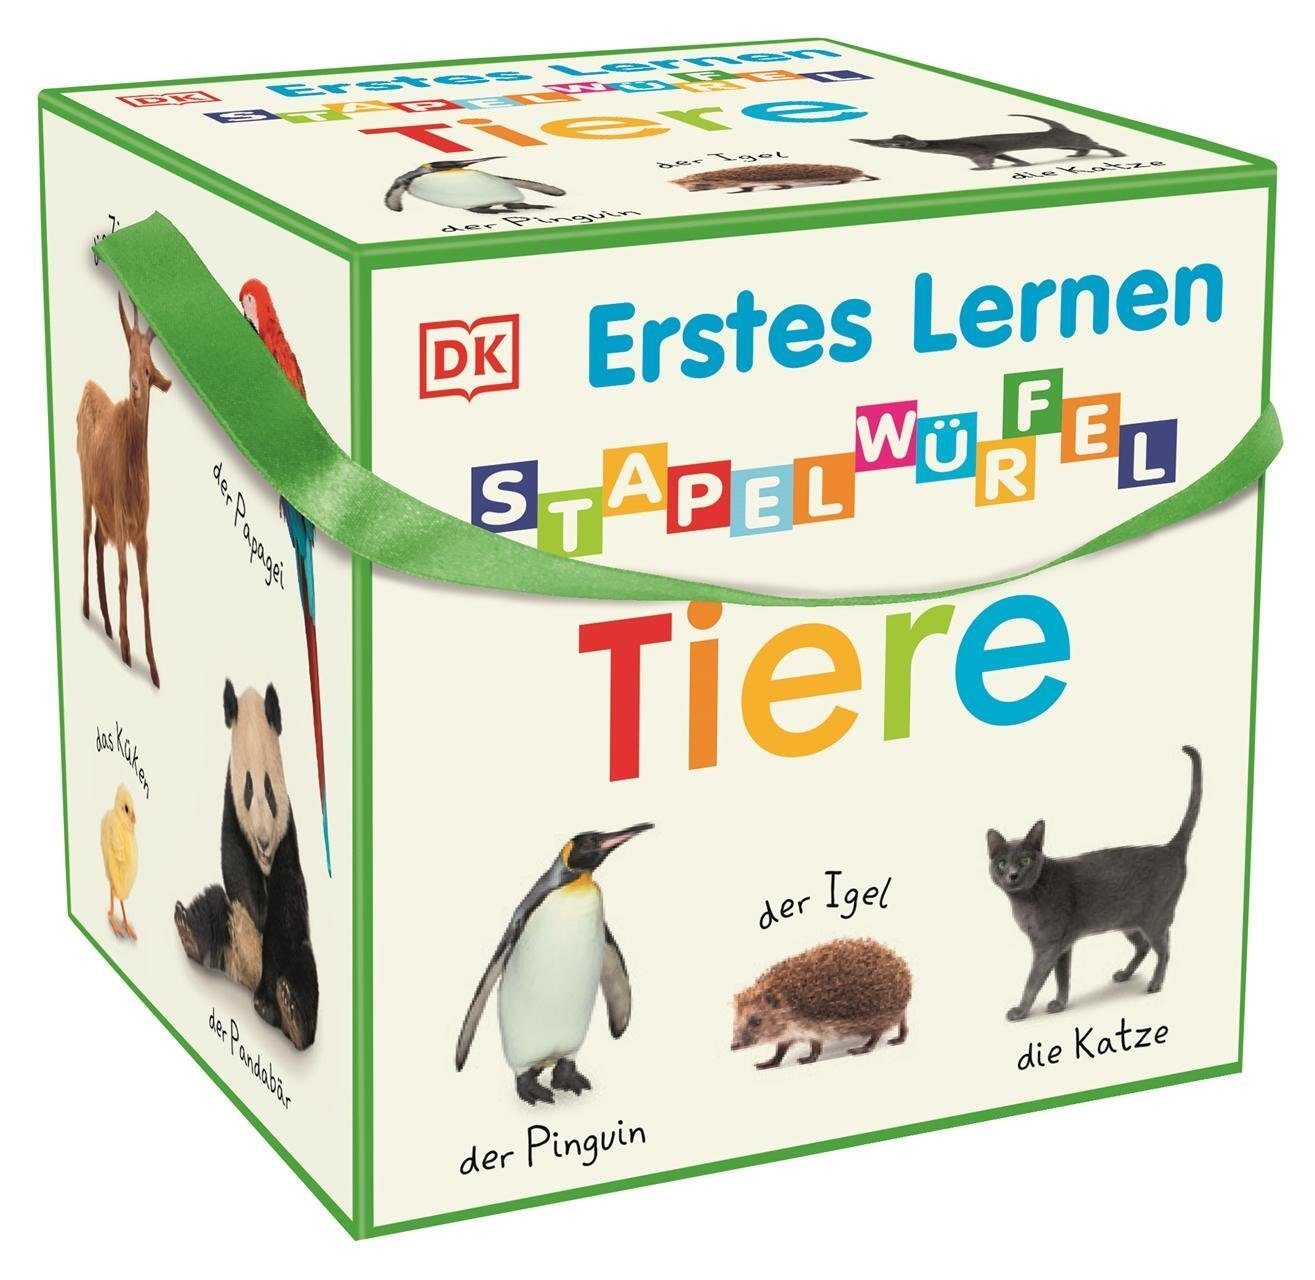 Dorling Kindersley Verlag Spiel, Erstes Lernen Stapelwürfel. Tiere